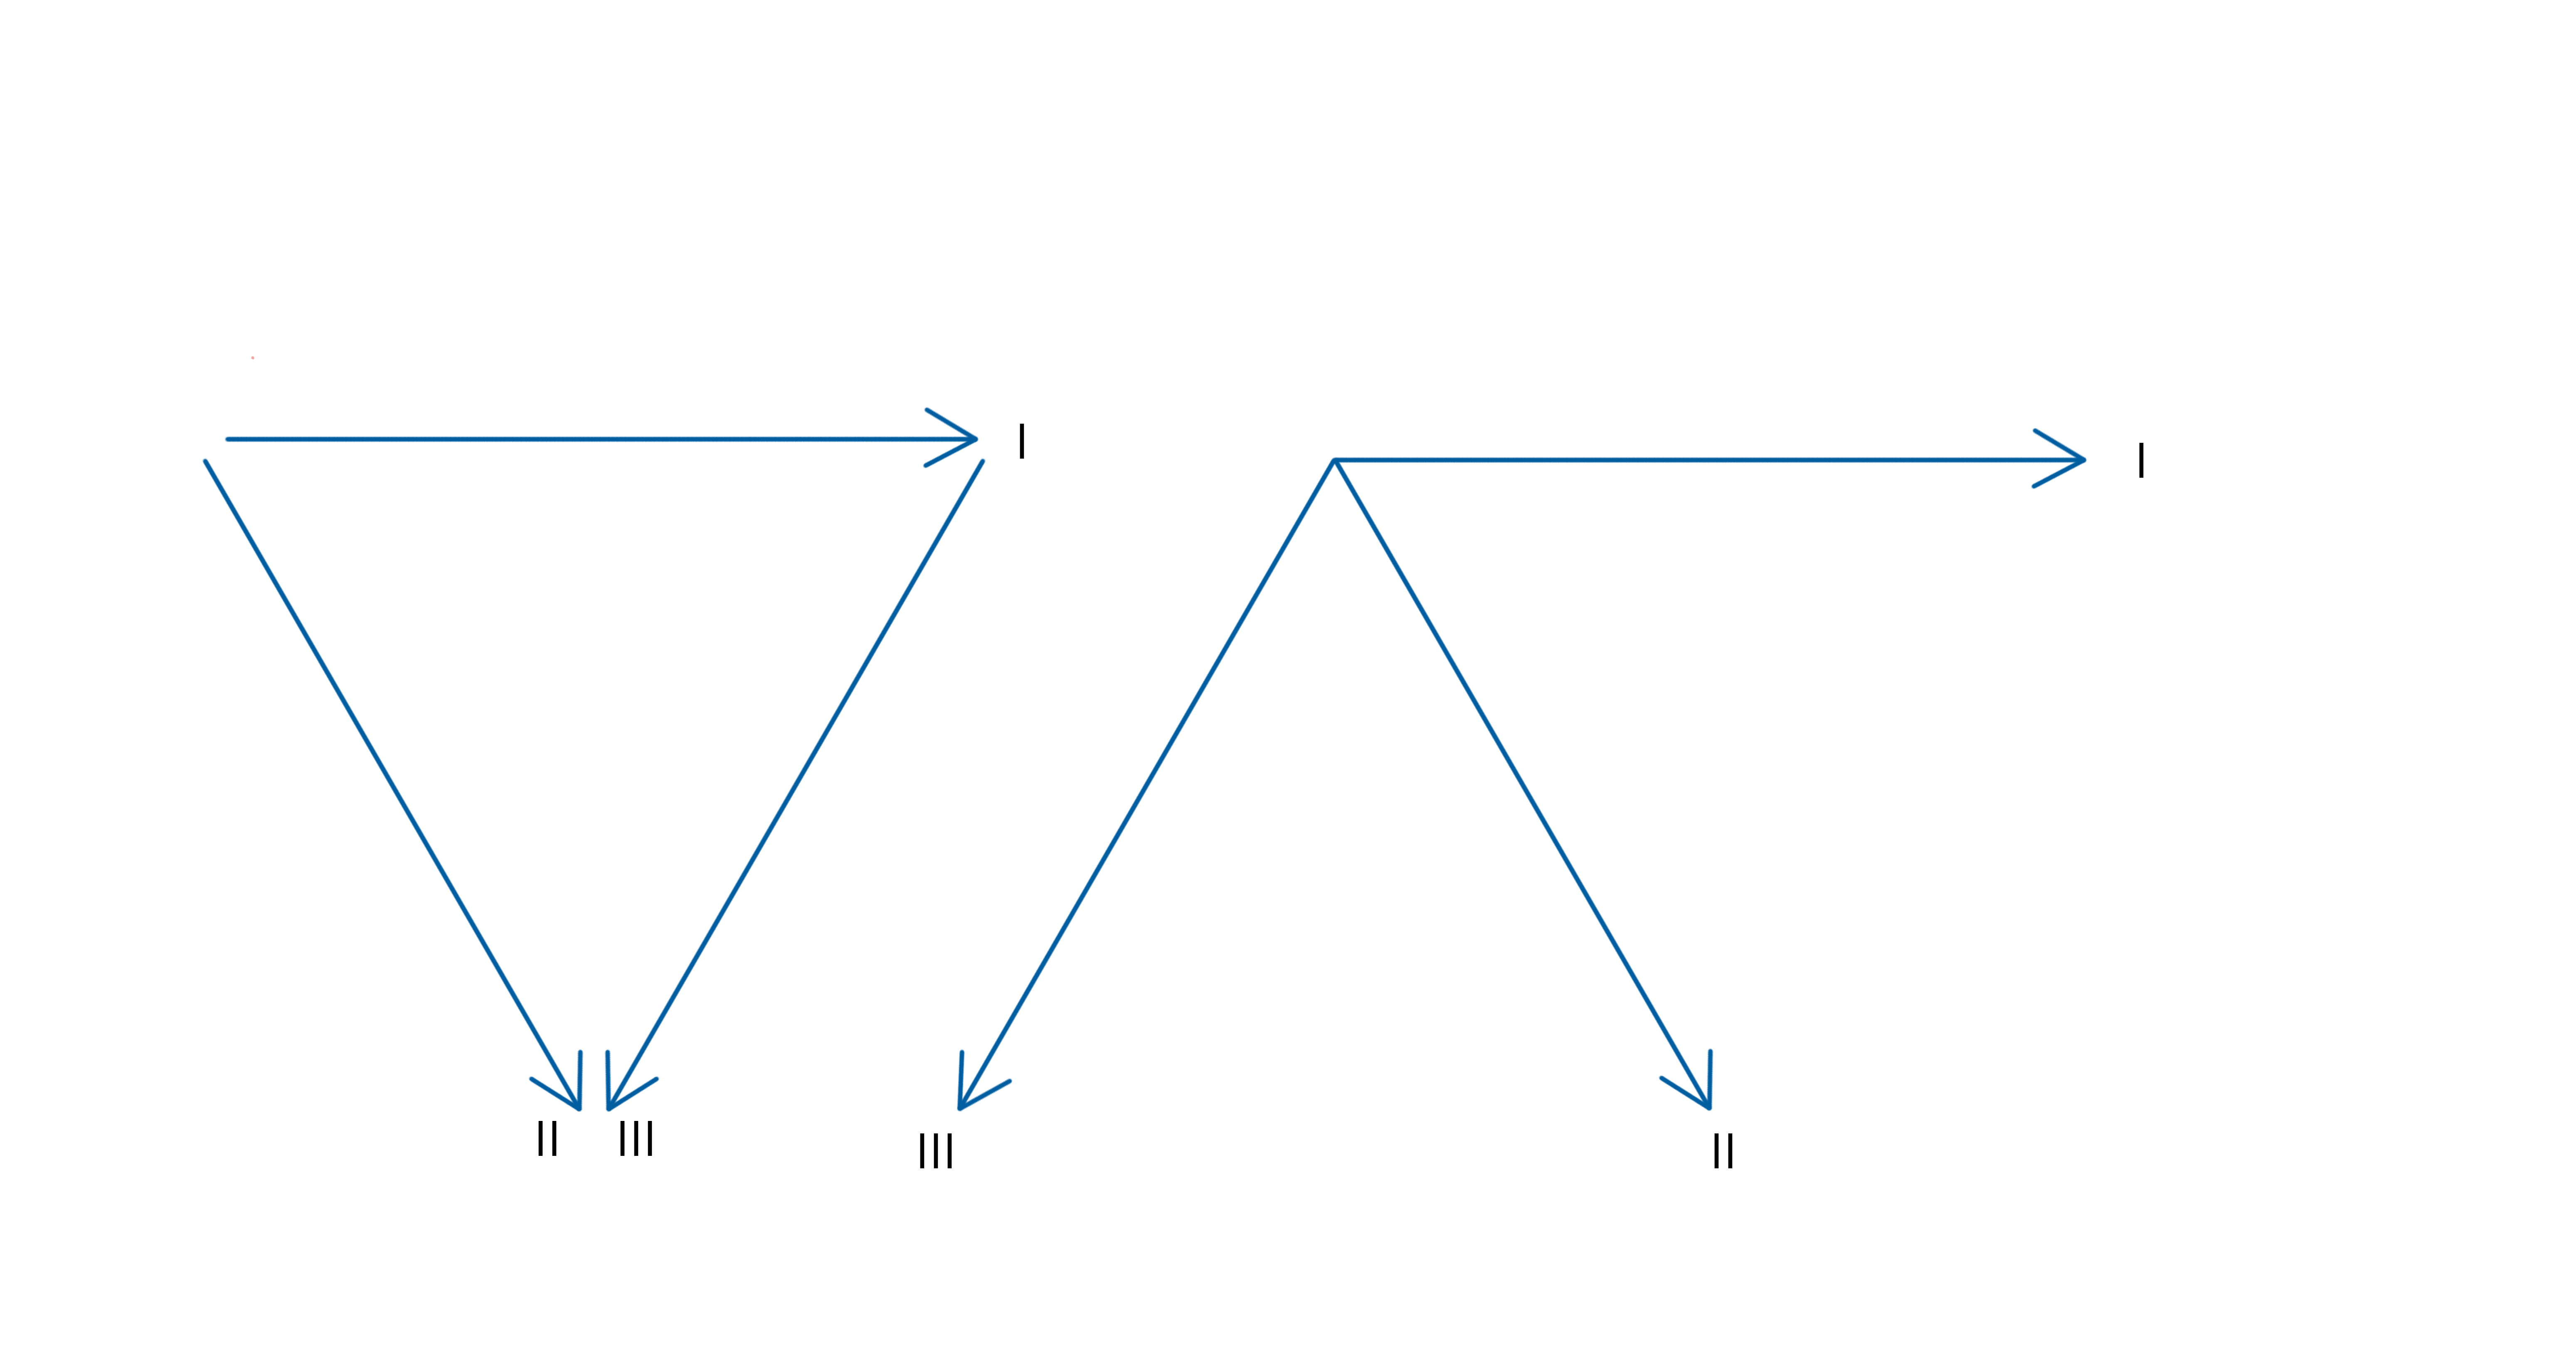 Schéma du Triangle d'Einthoven avec les dérivations I, II et III